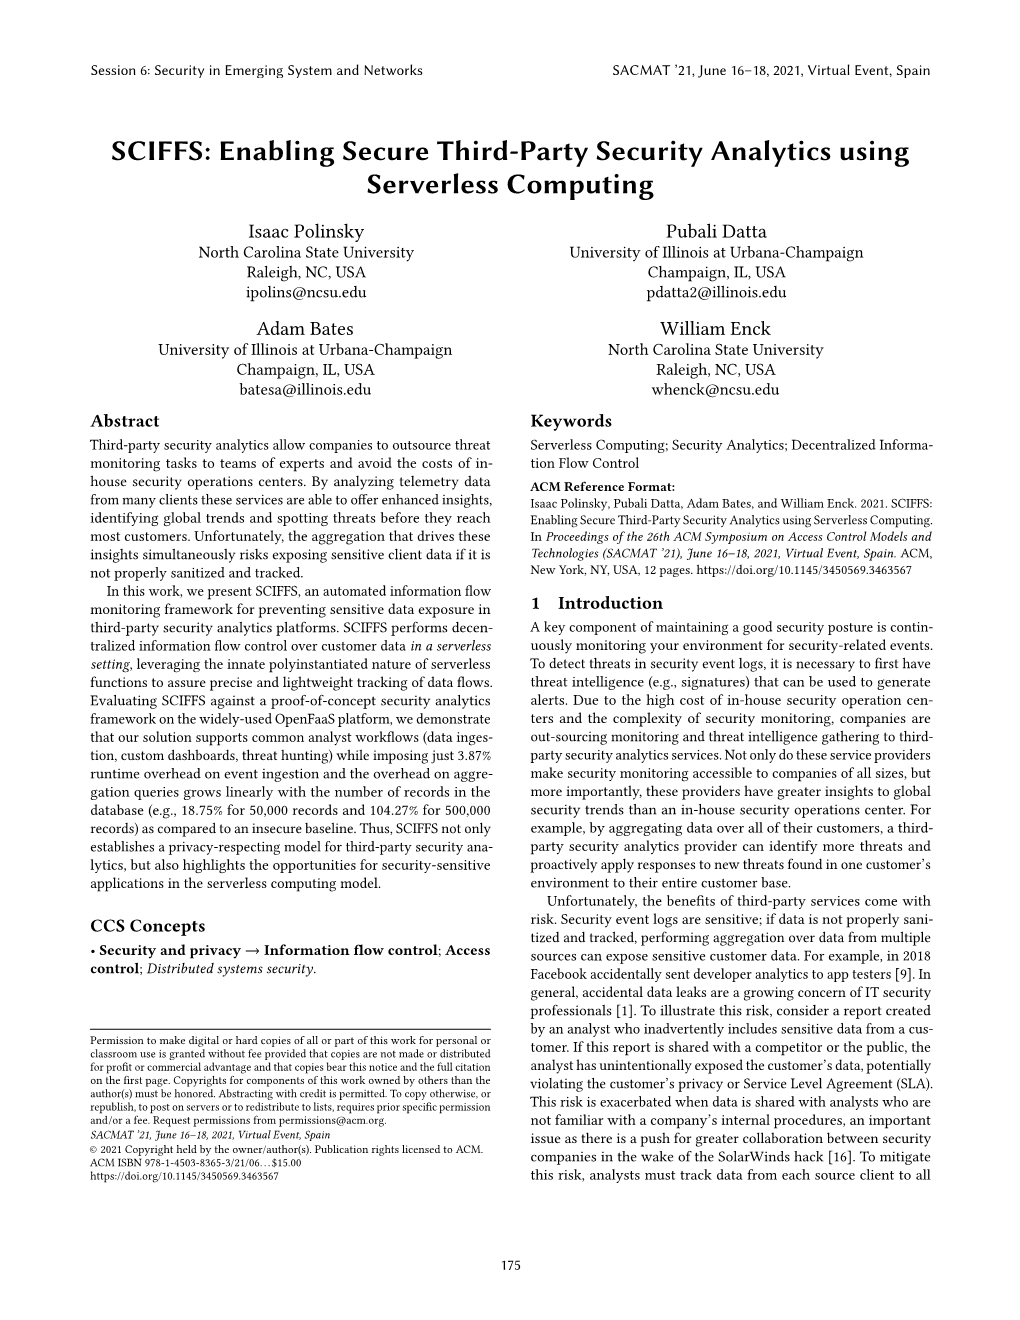 Enabling Secure Third-Party Security Analytics Using Serverless Computing